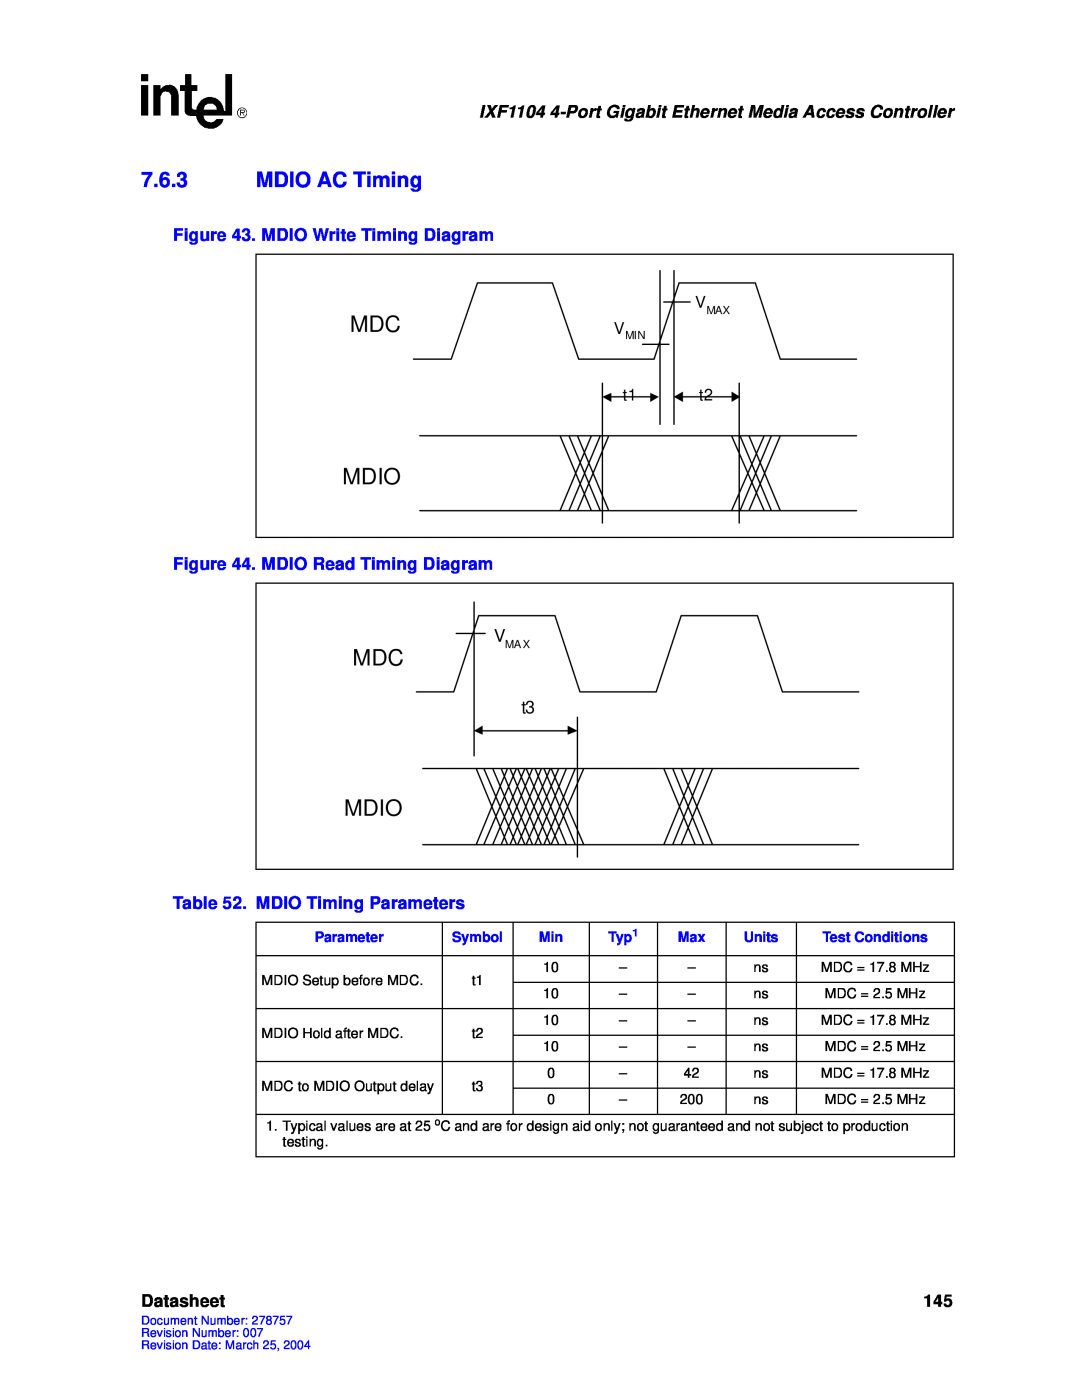 Intel IXF1104 manual 7.6.3MDIO AC Timing, Mdc Mdio, Datasheet 